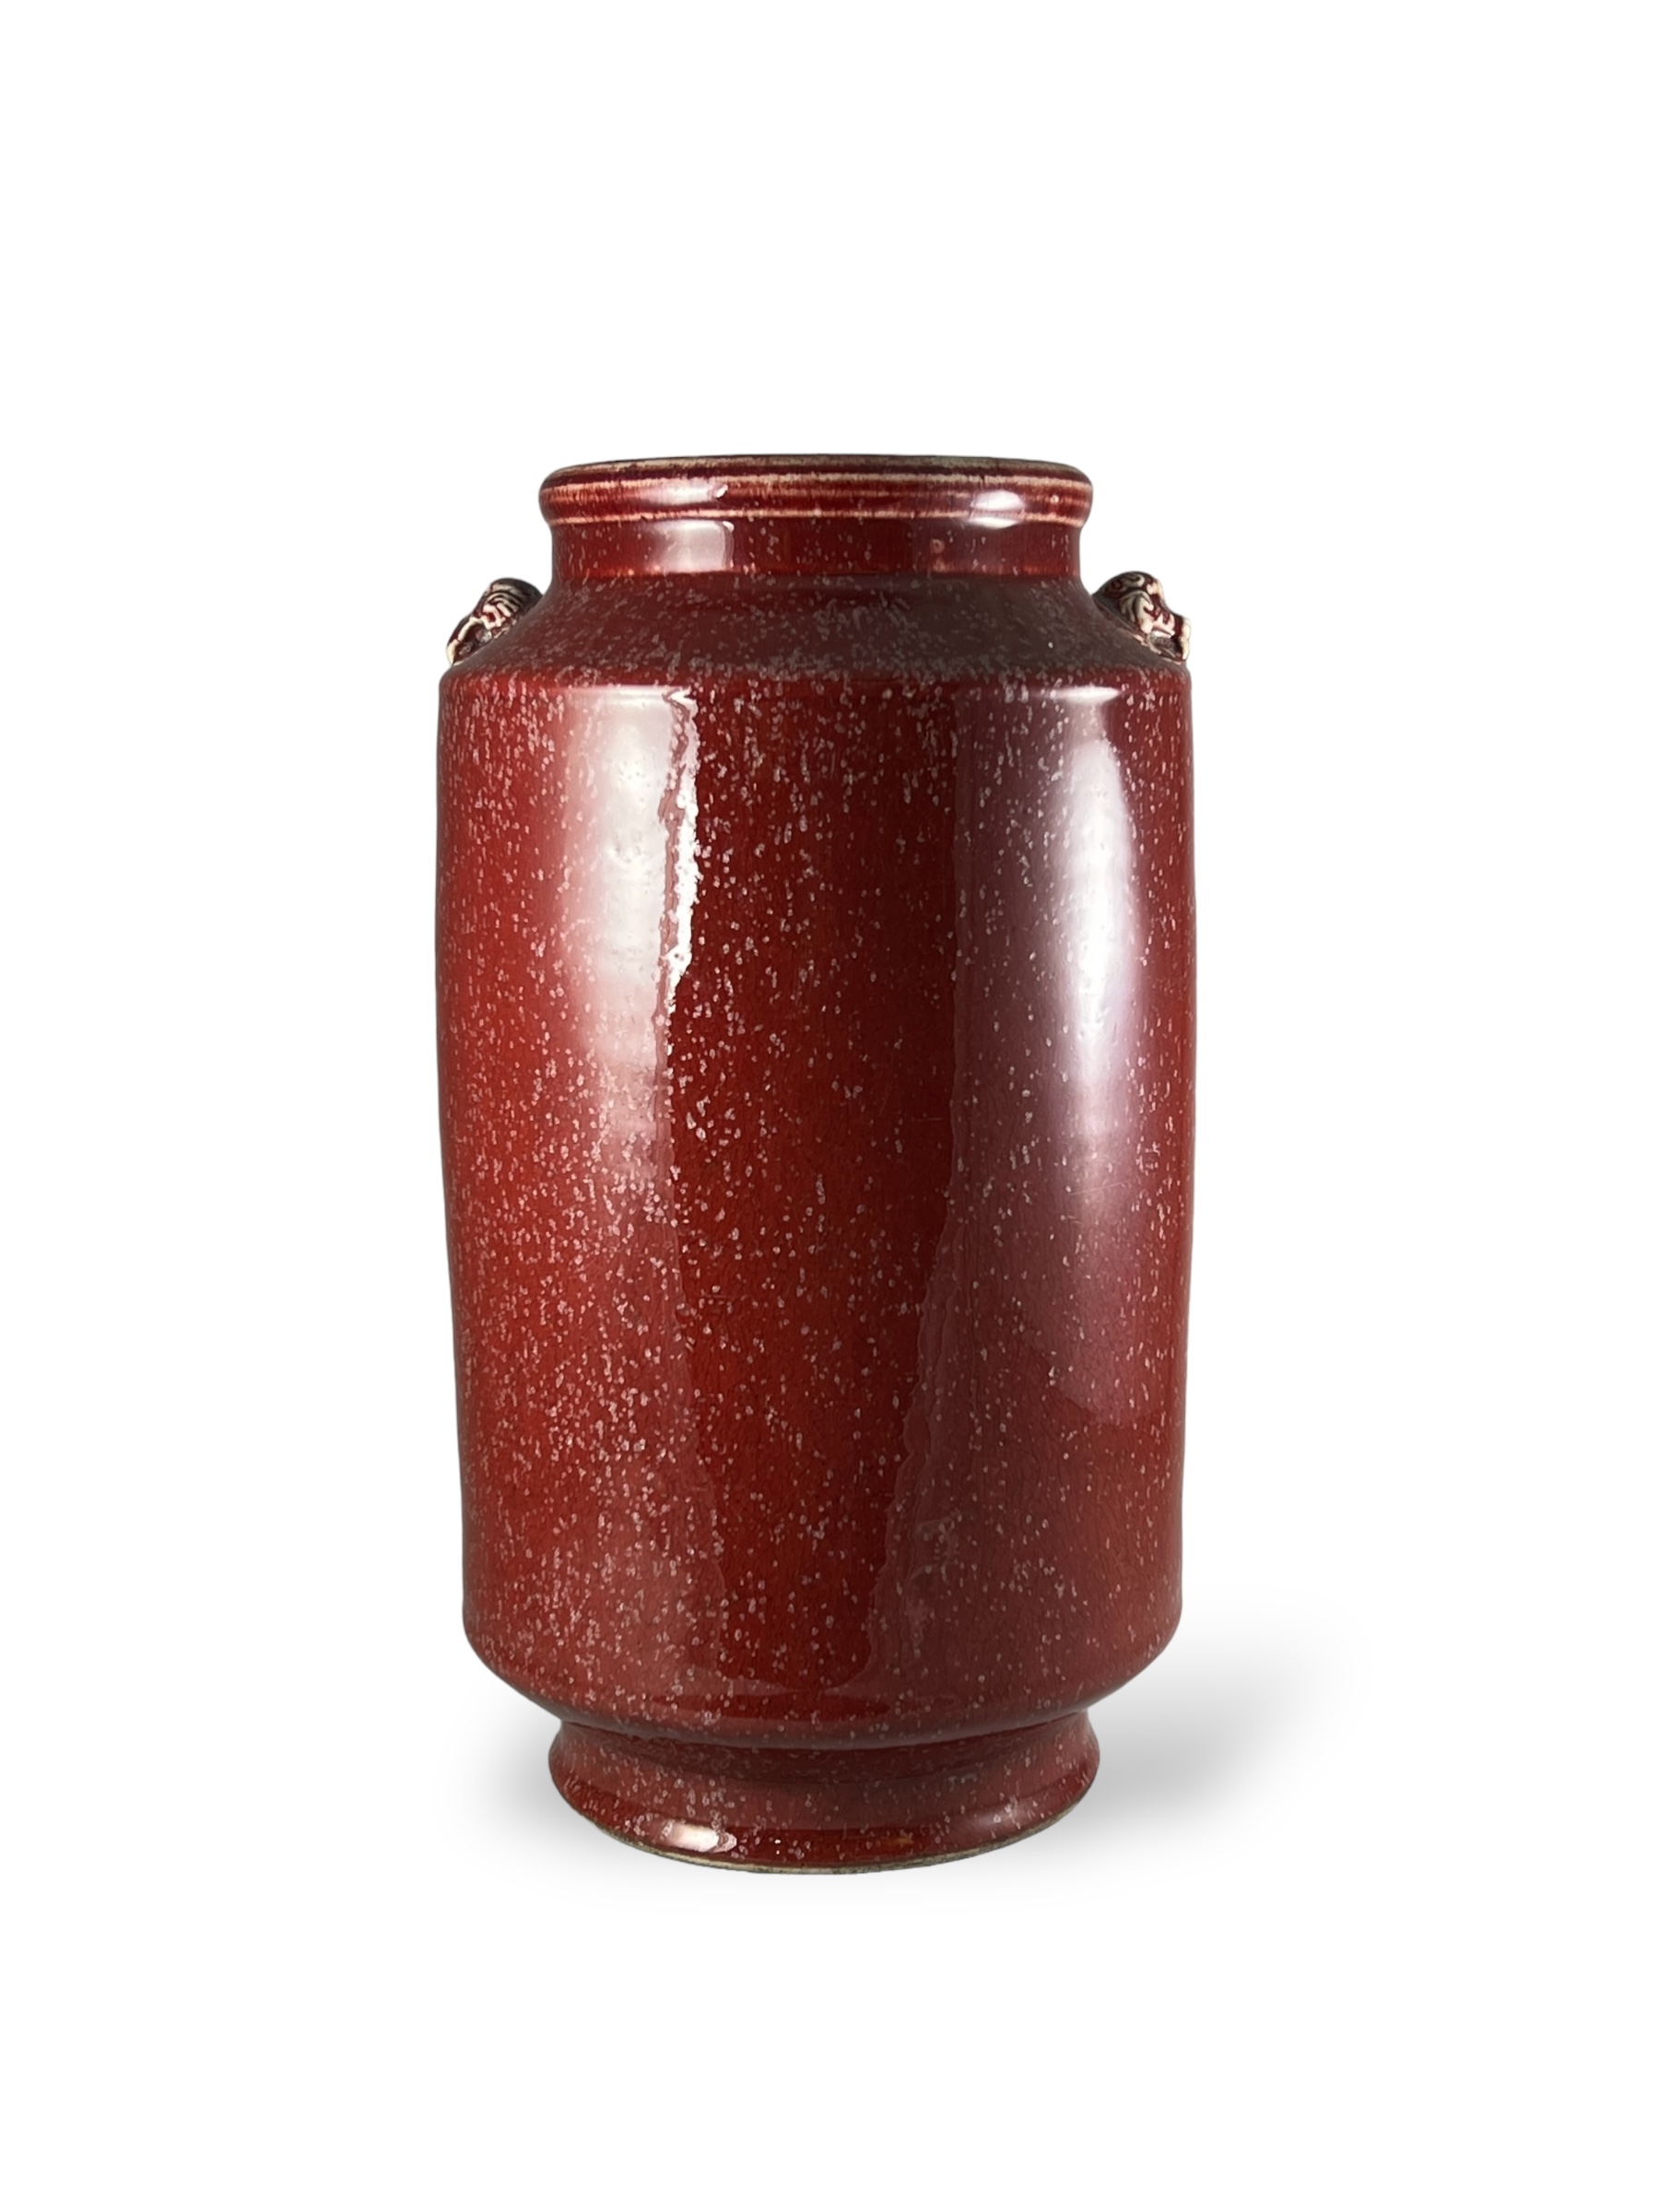 A Red glazed Cylindrical Jar, late Qing dynasty